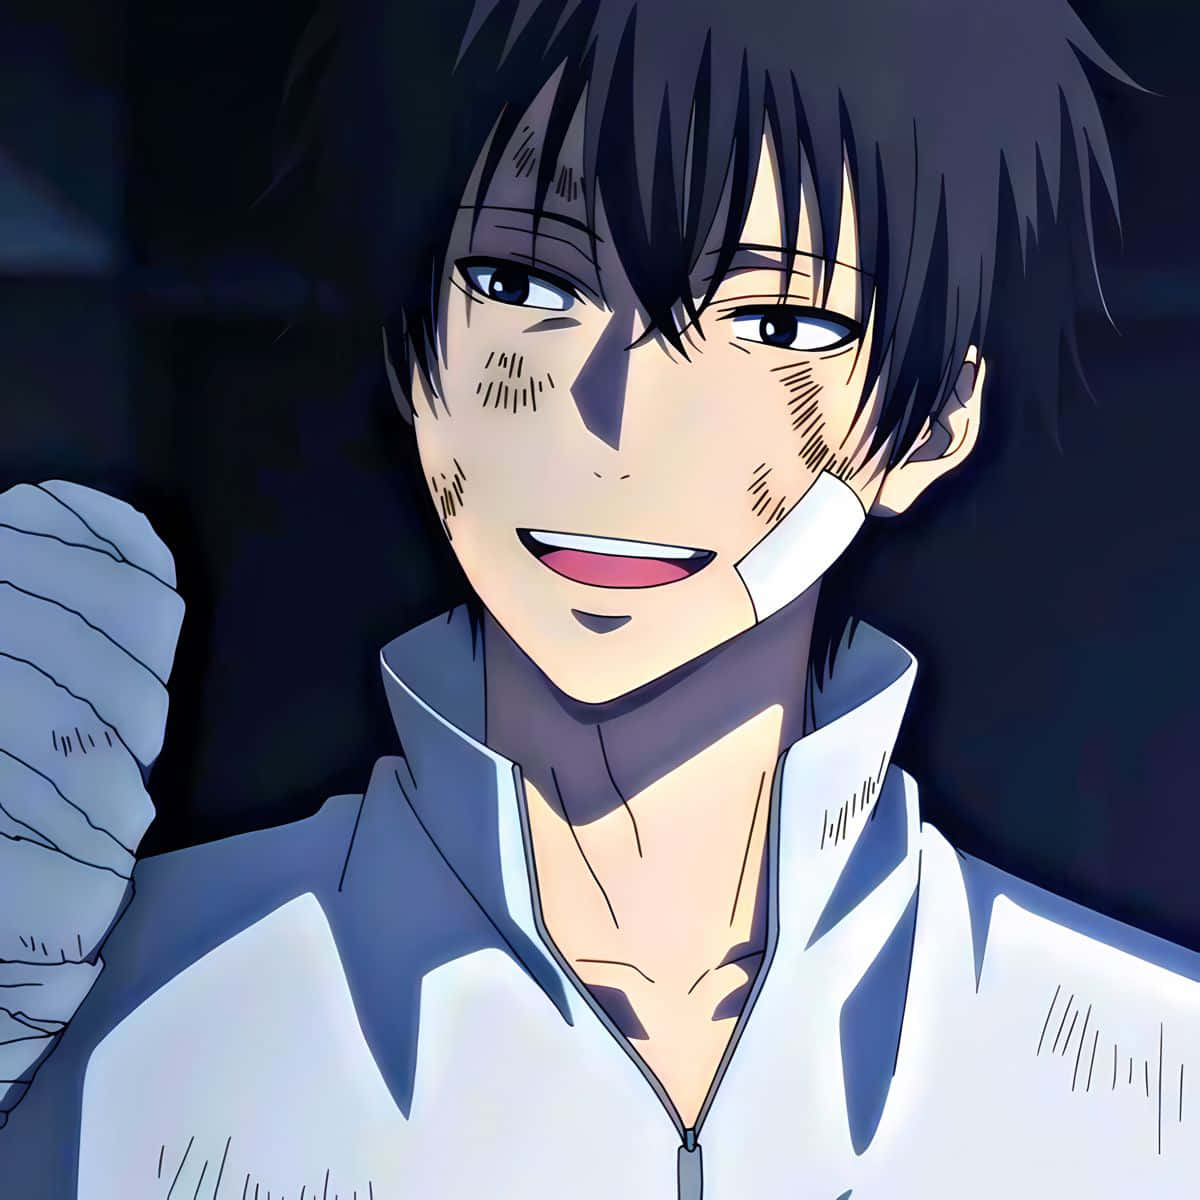 Smiling Anime Boy With Bandage Pfp Wallpaper